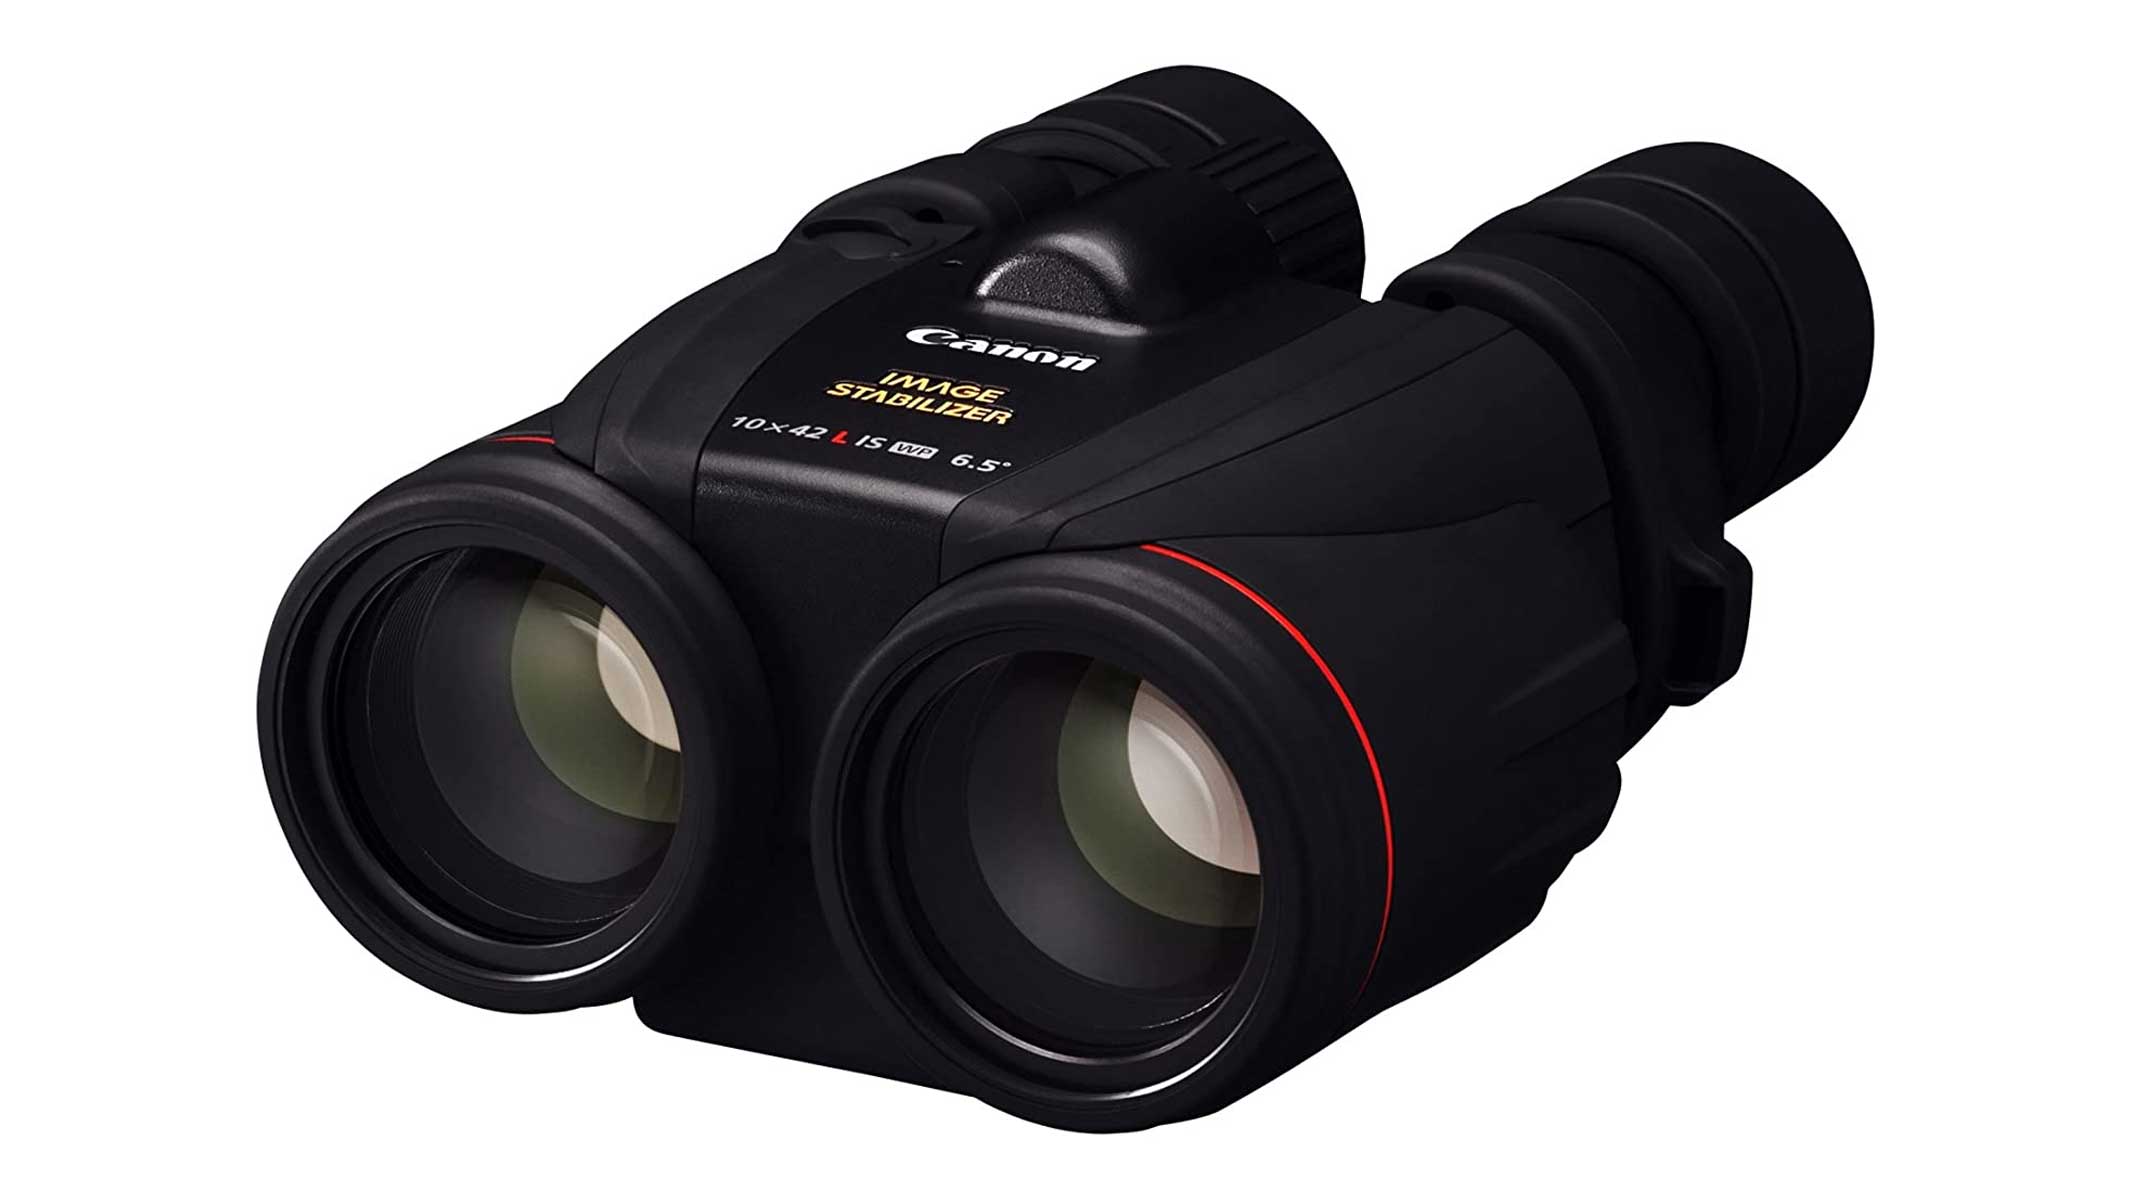 Canon 10x42L IS WP binoculars product image